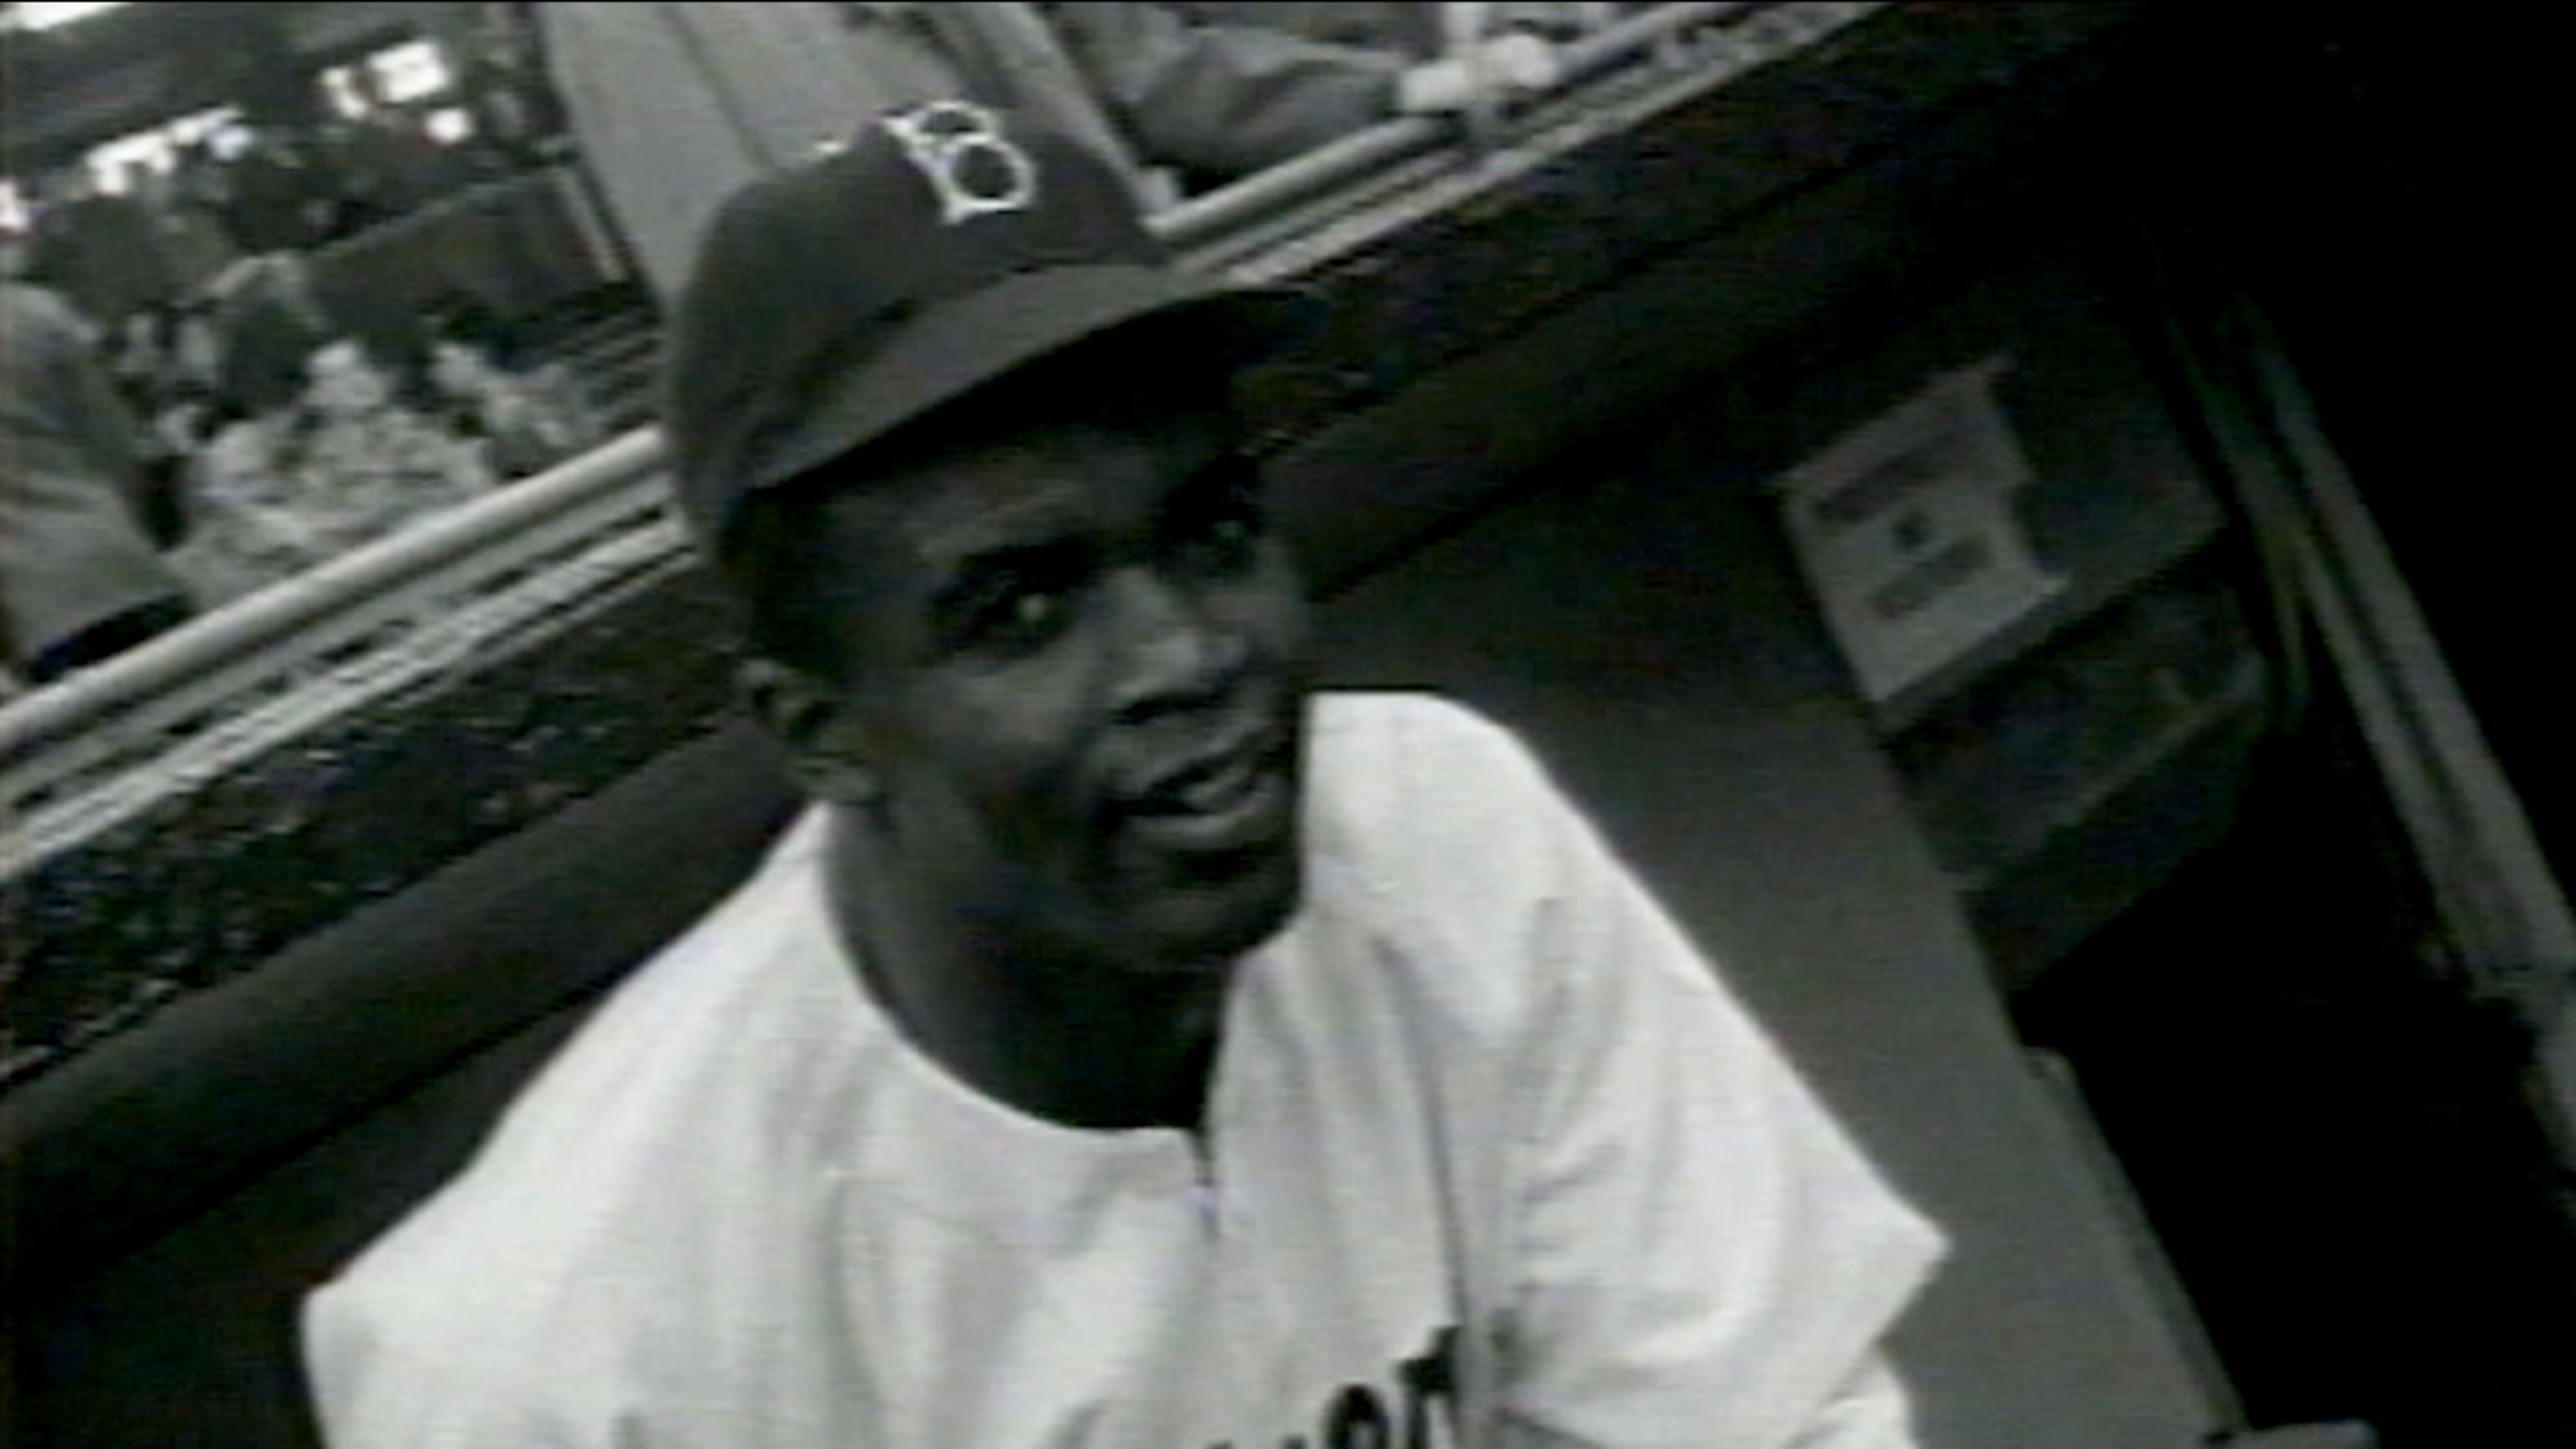 MLB celebrates timely Jackie Robinson Day